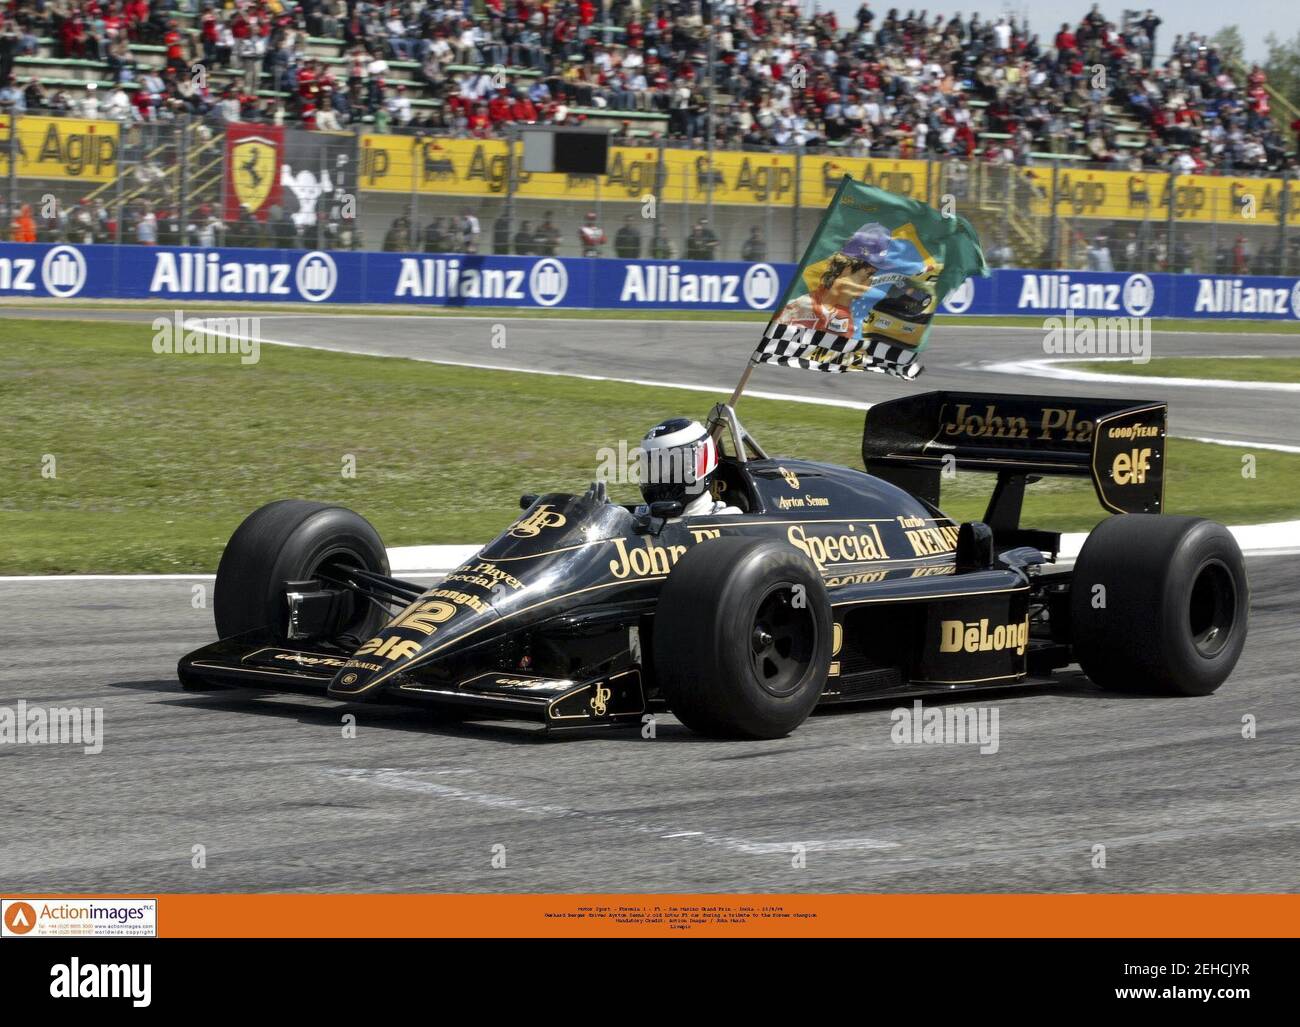 Motor Sport - Formula One - F1 - 2004 San Marino Grand Prix - Imola - 25/4/ 04 Gerhard Berger drives Ayrton Senna's old Lotus F1 car during a tribute  to the former